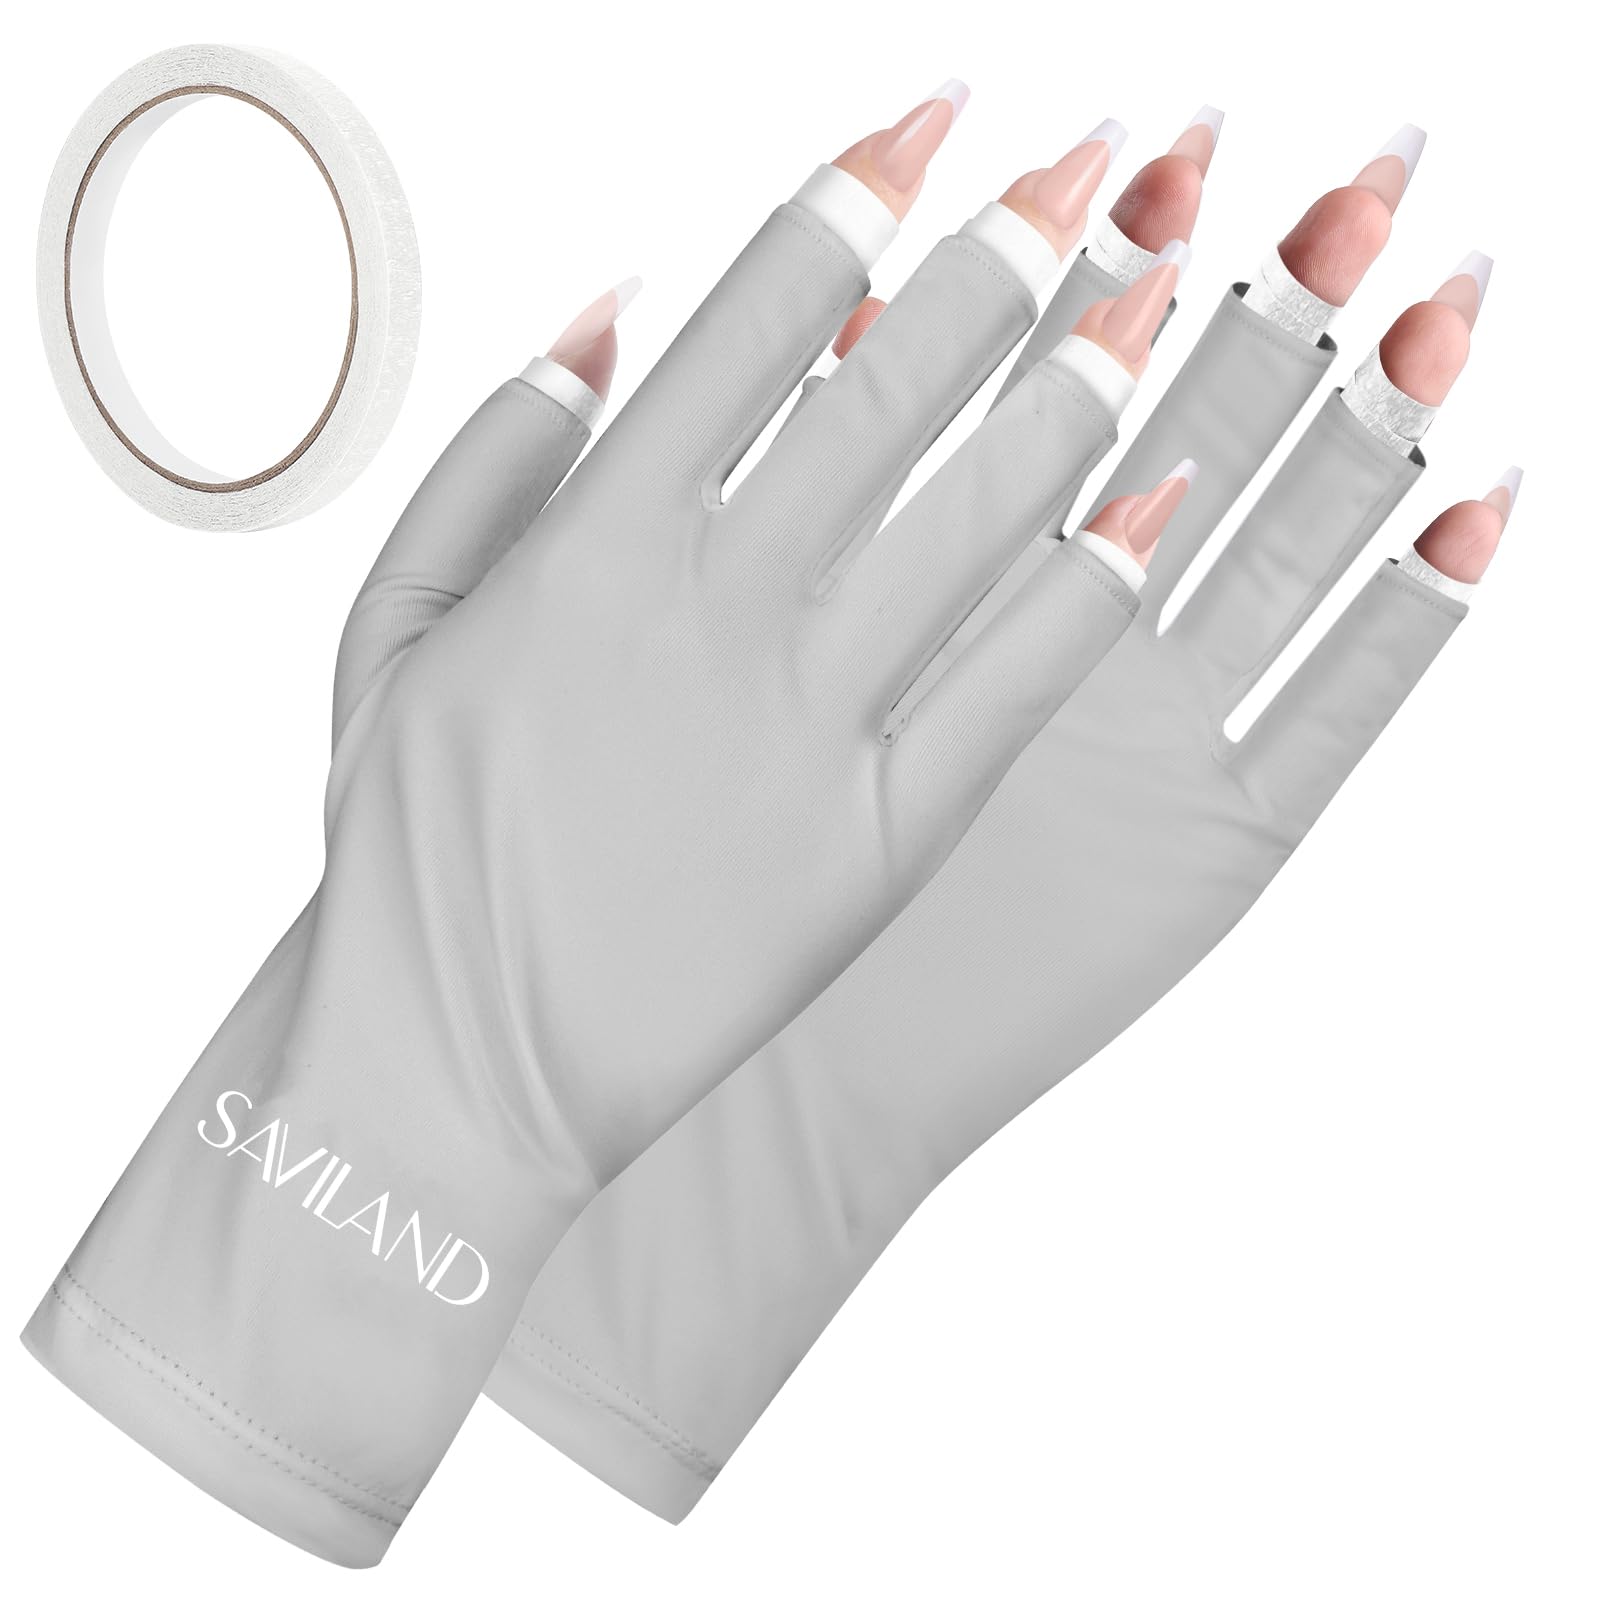 Saviland U V Gloves for Nails - 2 Pairs UPF200+ High-tech